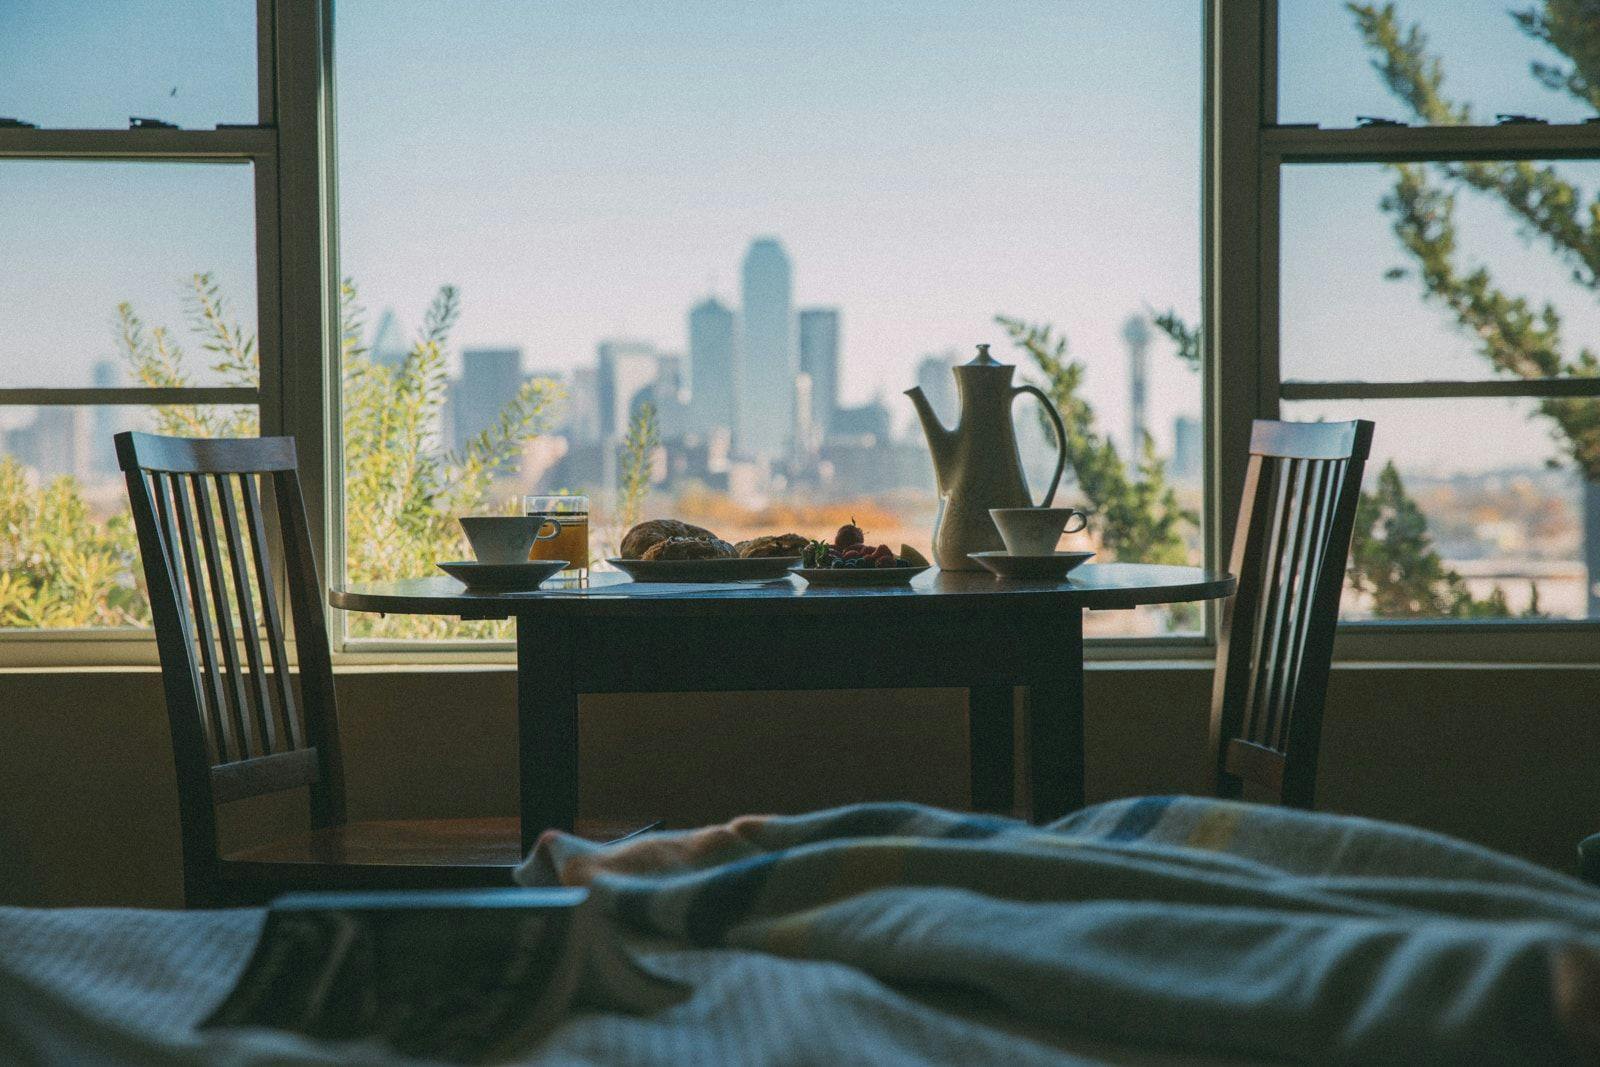 Breakfast table in front of a window